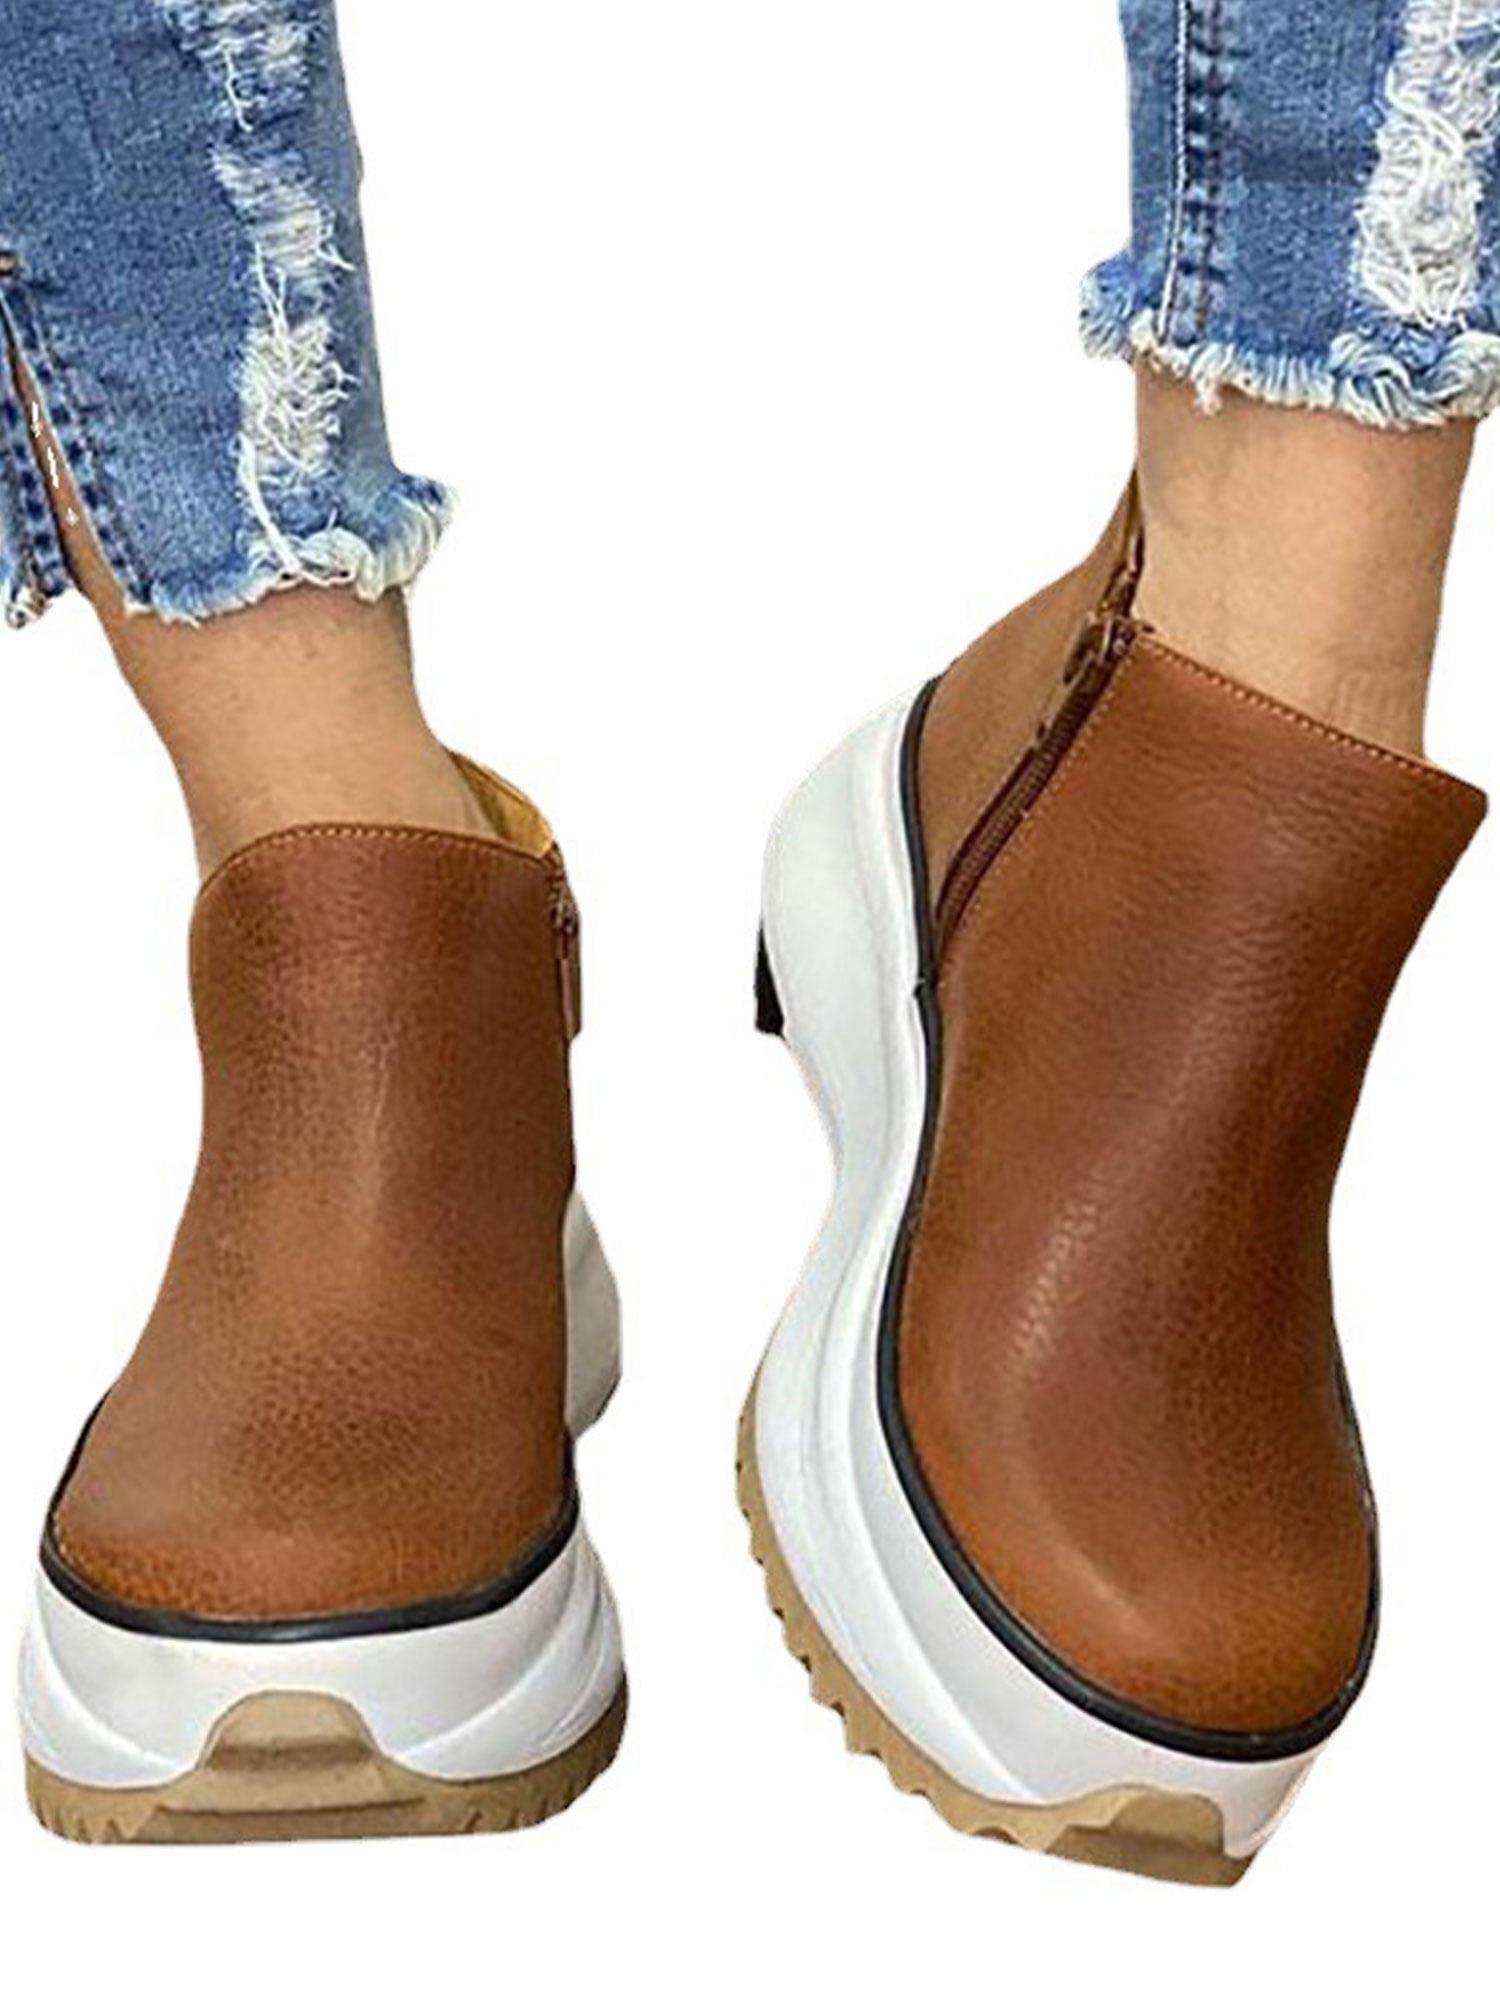 Women Wedge High Heel Platform Lace White Creeper Elegant Pumps Slip On Shoes Sz 